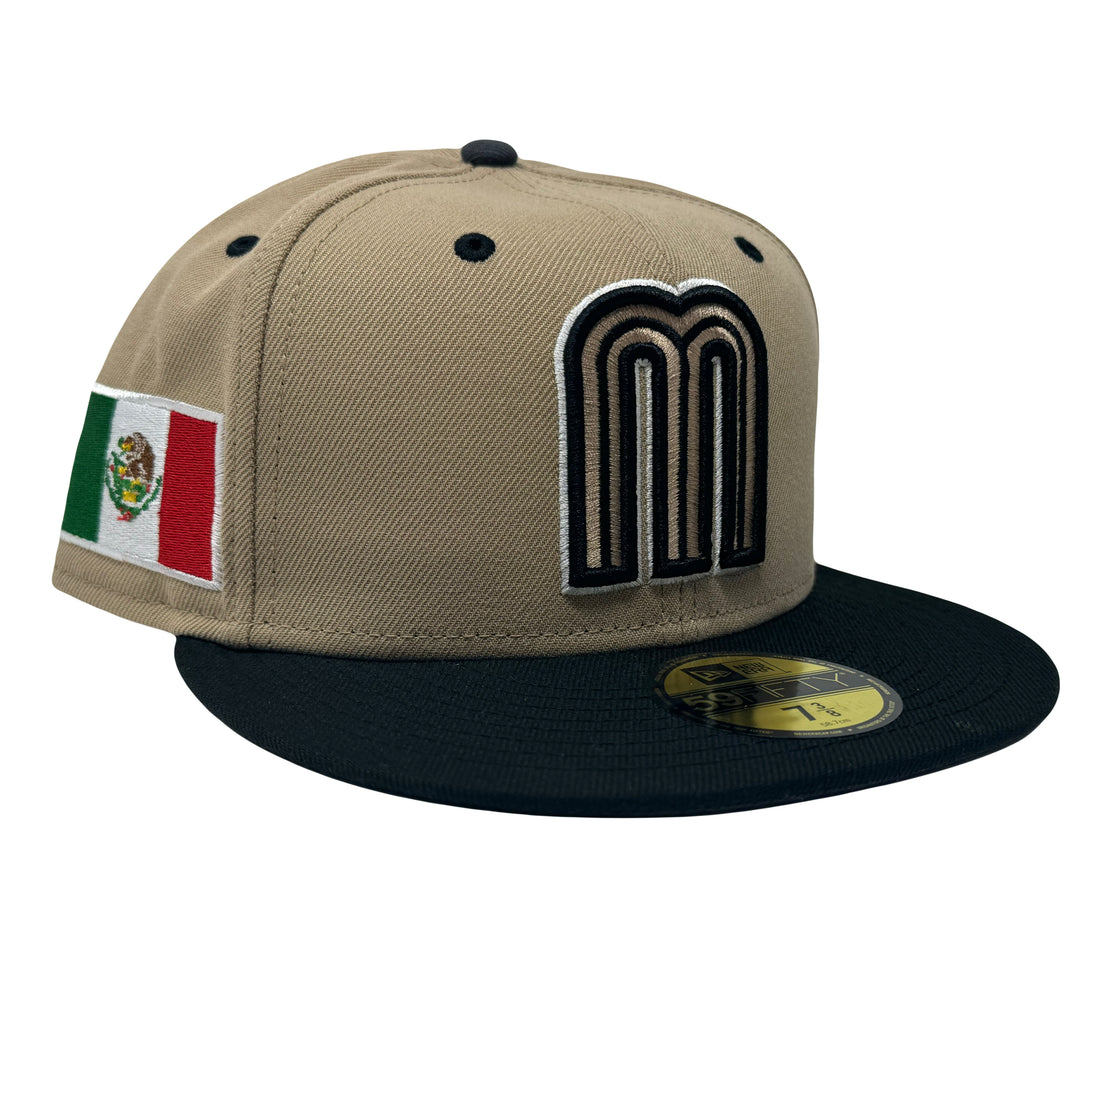 Mexico World Baseball Classic Camel Crown Black Visor Dark gray brim New Era Fitted Hat